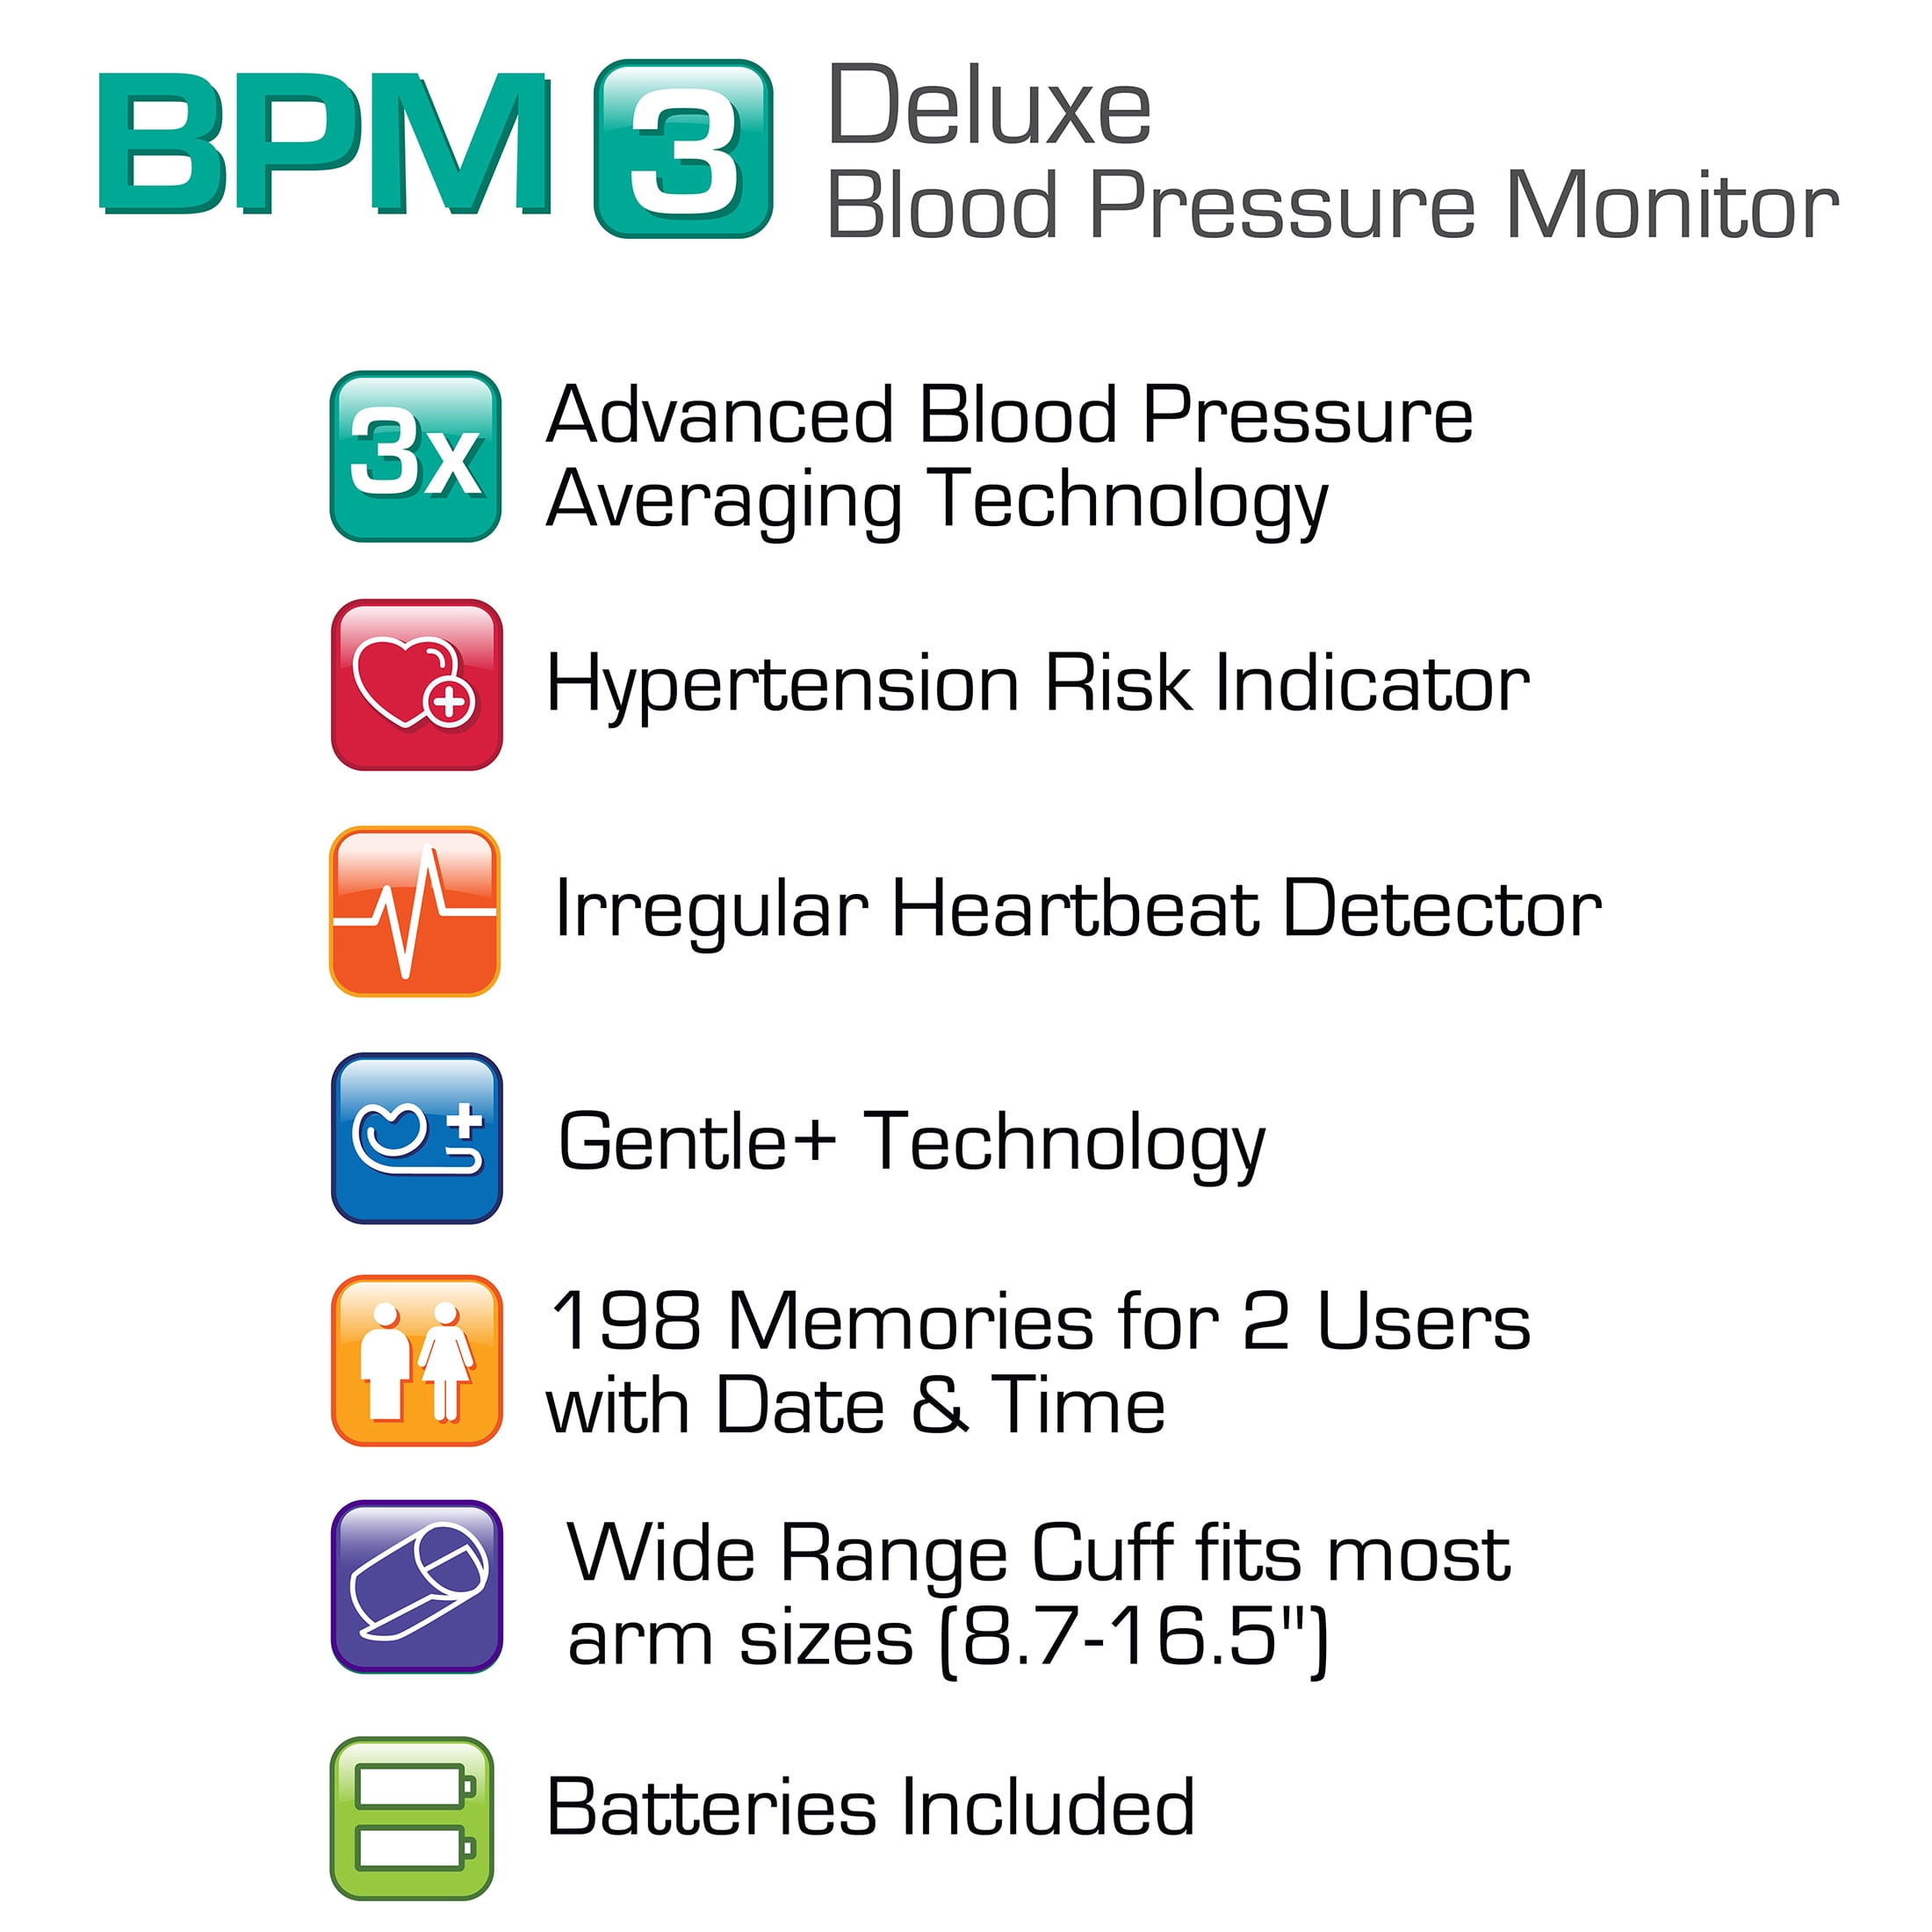 Microlife BP3GU1-8X BPM6 - Premium Blood Pressure Monitor